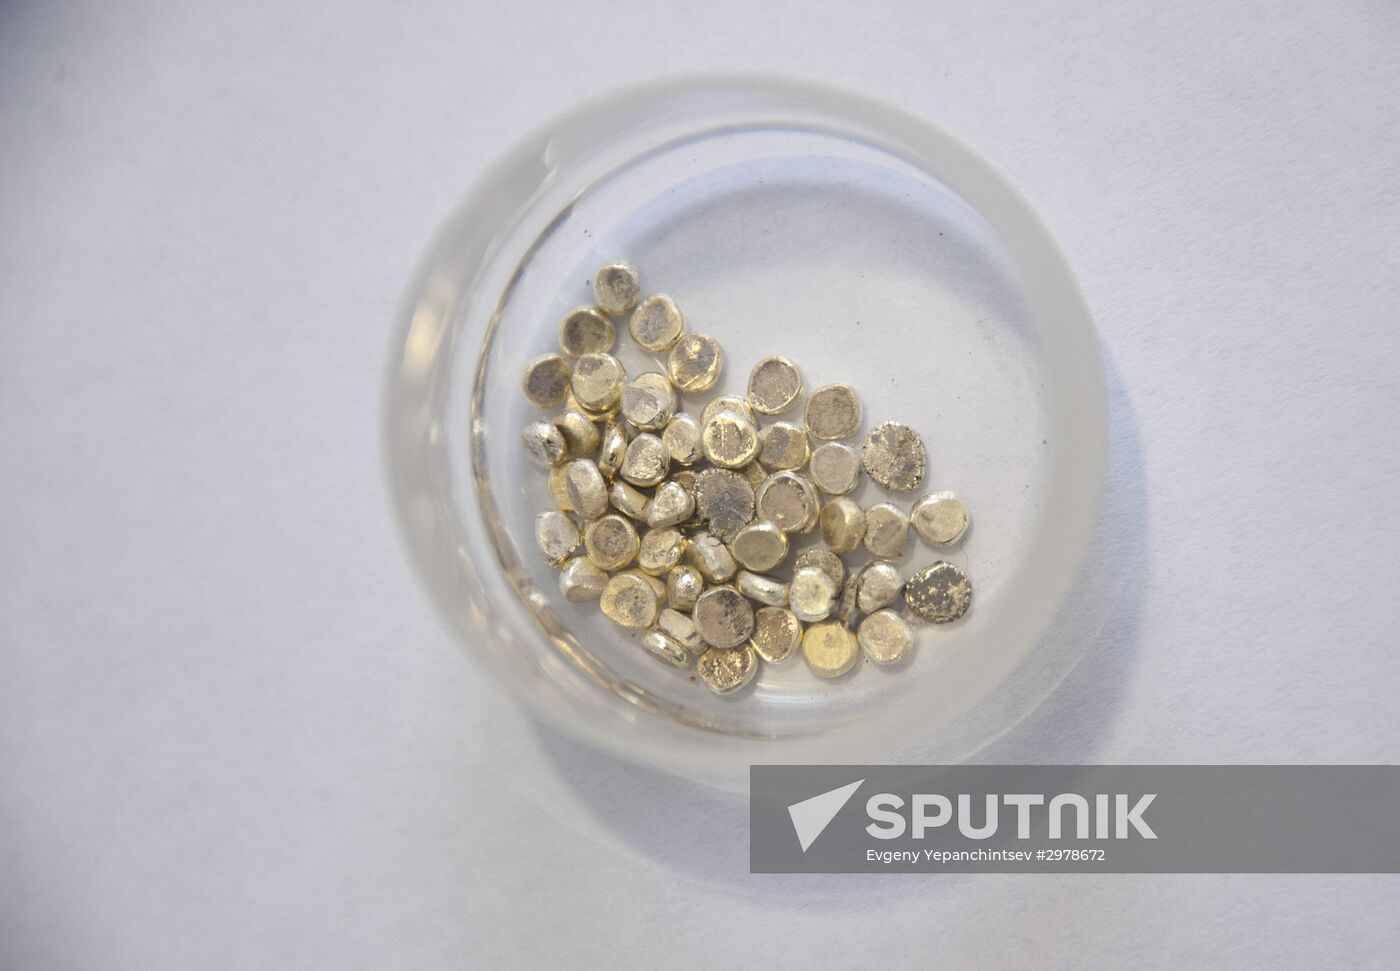 Savkinskoye gold deposit in Trans-Baikal Territory